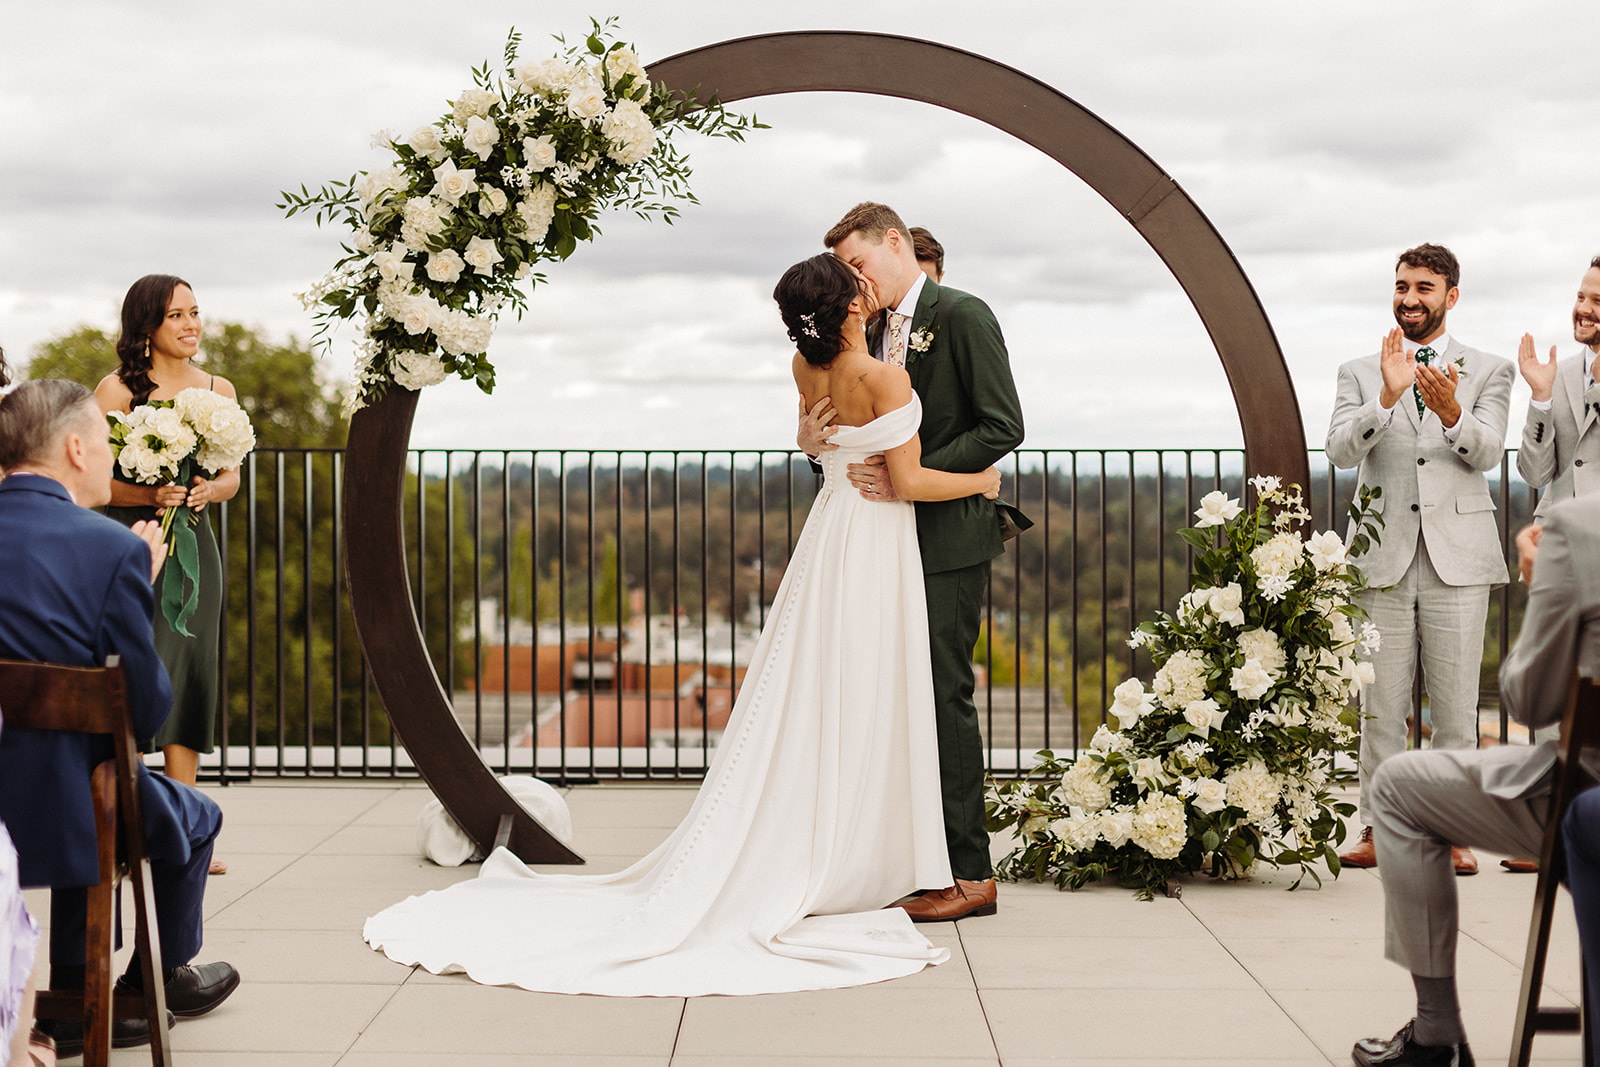 ceremony kiss photo at ironlight rooftop terrace wedding lake oswego oregon